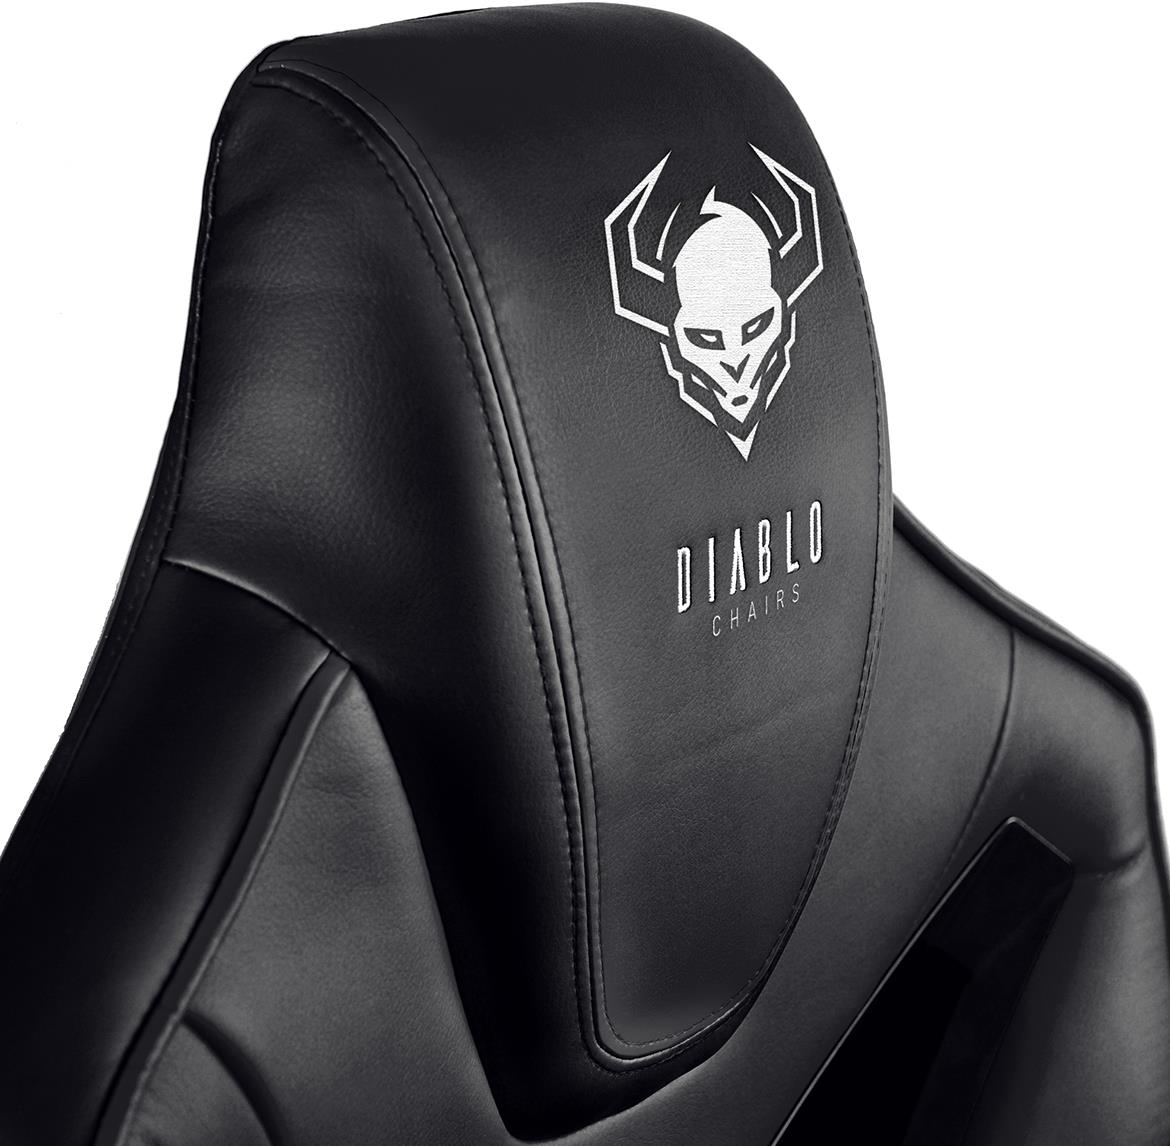 Diablo X-Fighter kancelarijska stolica 69x56x127 cm crna